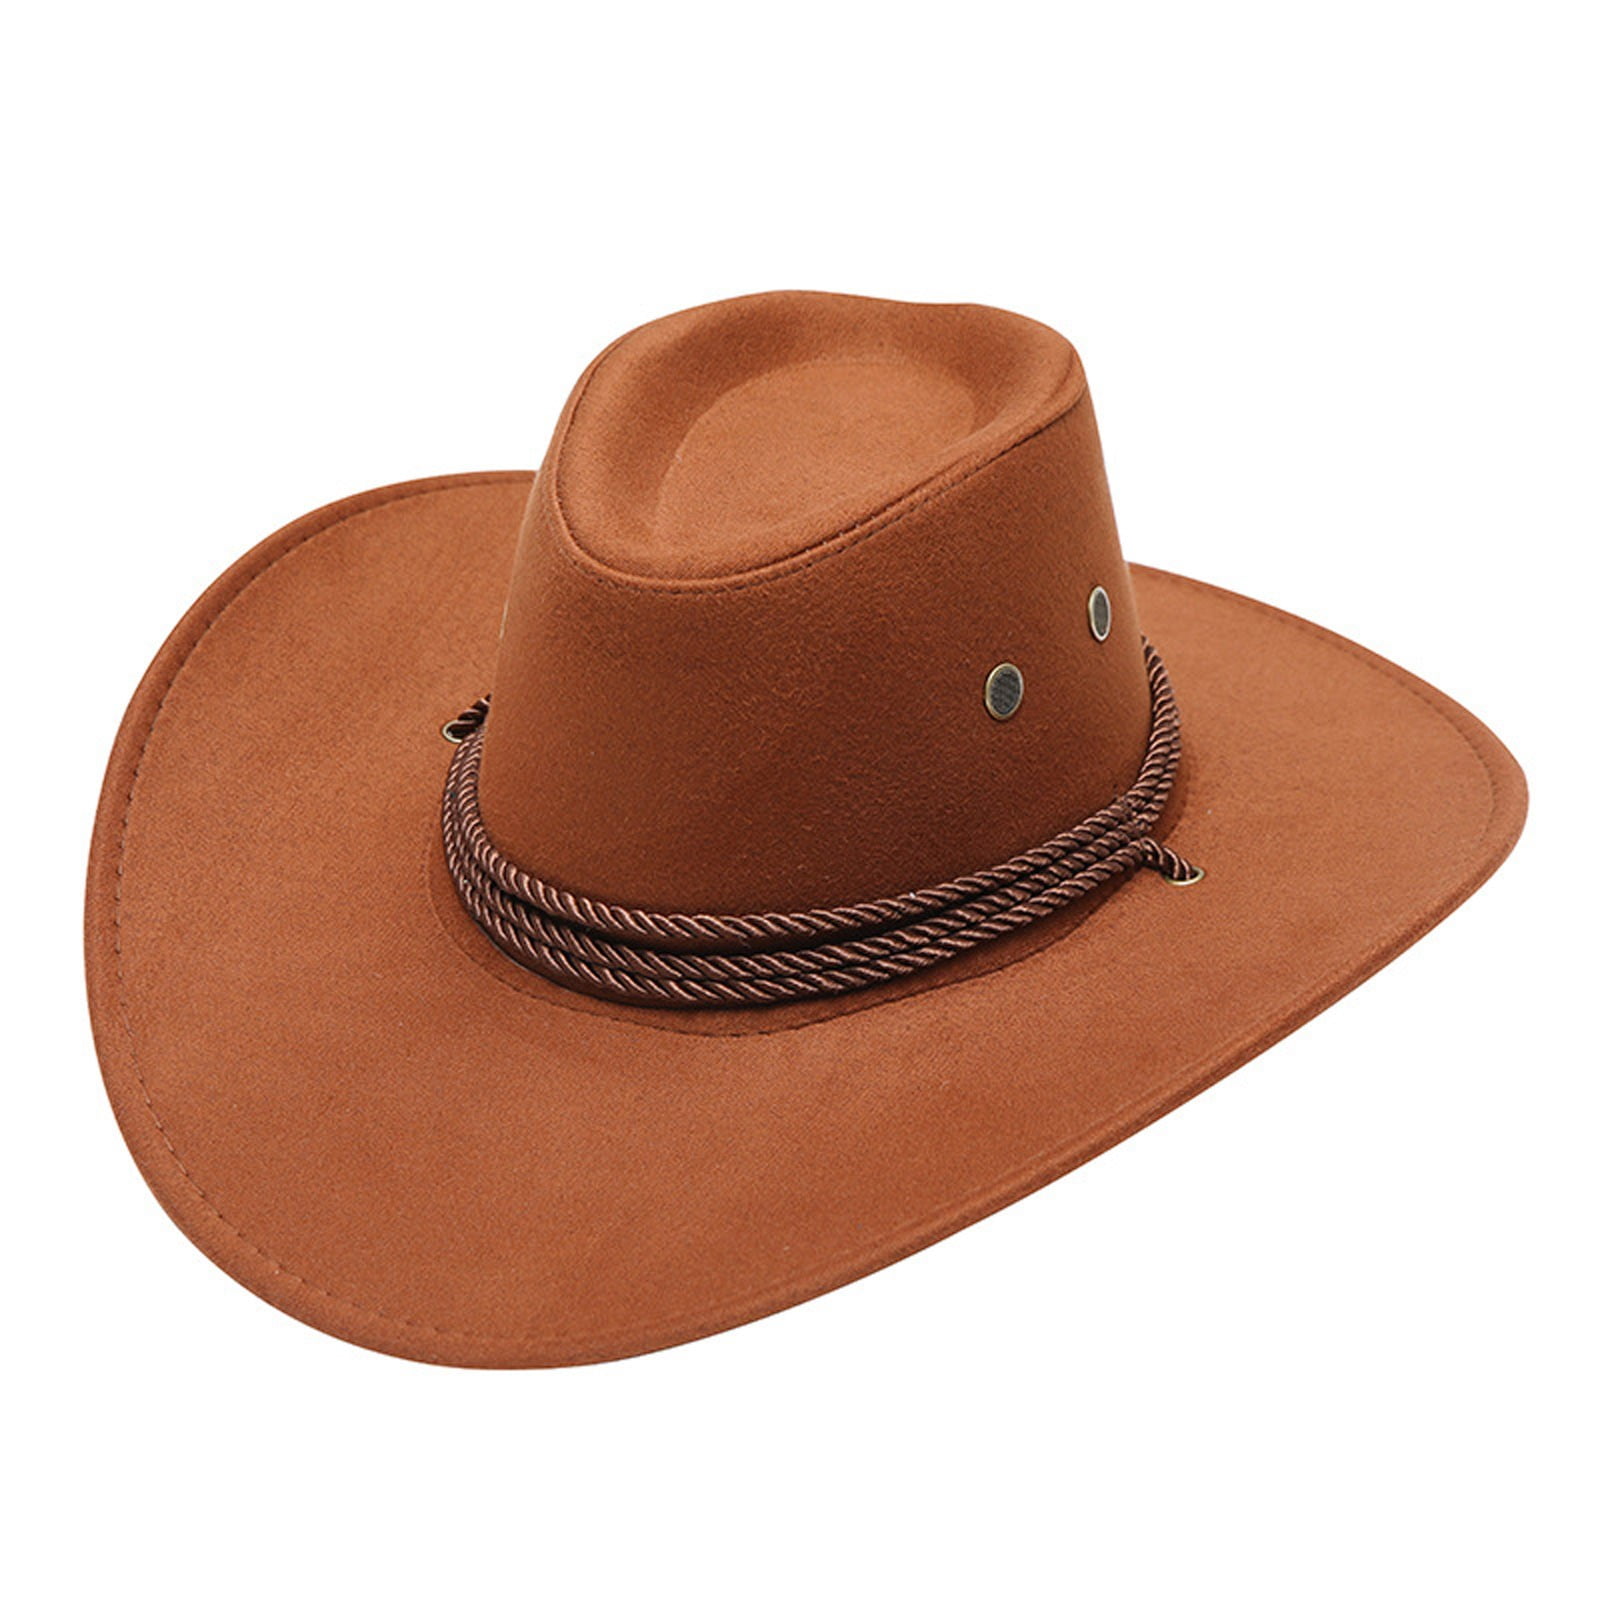 2dxuixsh Cowboy Western Hats for Men Adult Casual Solid Summer Western Fashion Cowboy Sun Hat Wide Brim Travel Sun Cap Belly Cowboy Hat 7 1/2 Gold One